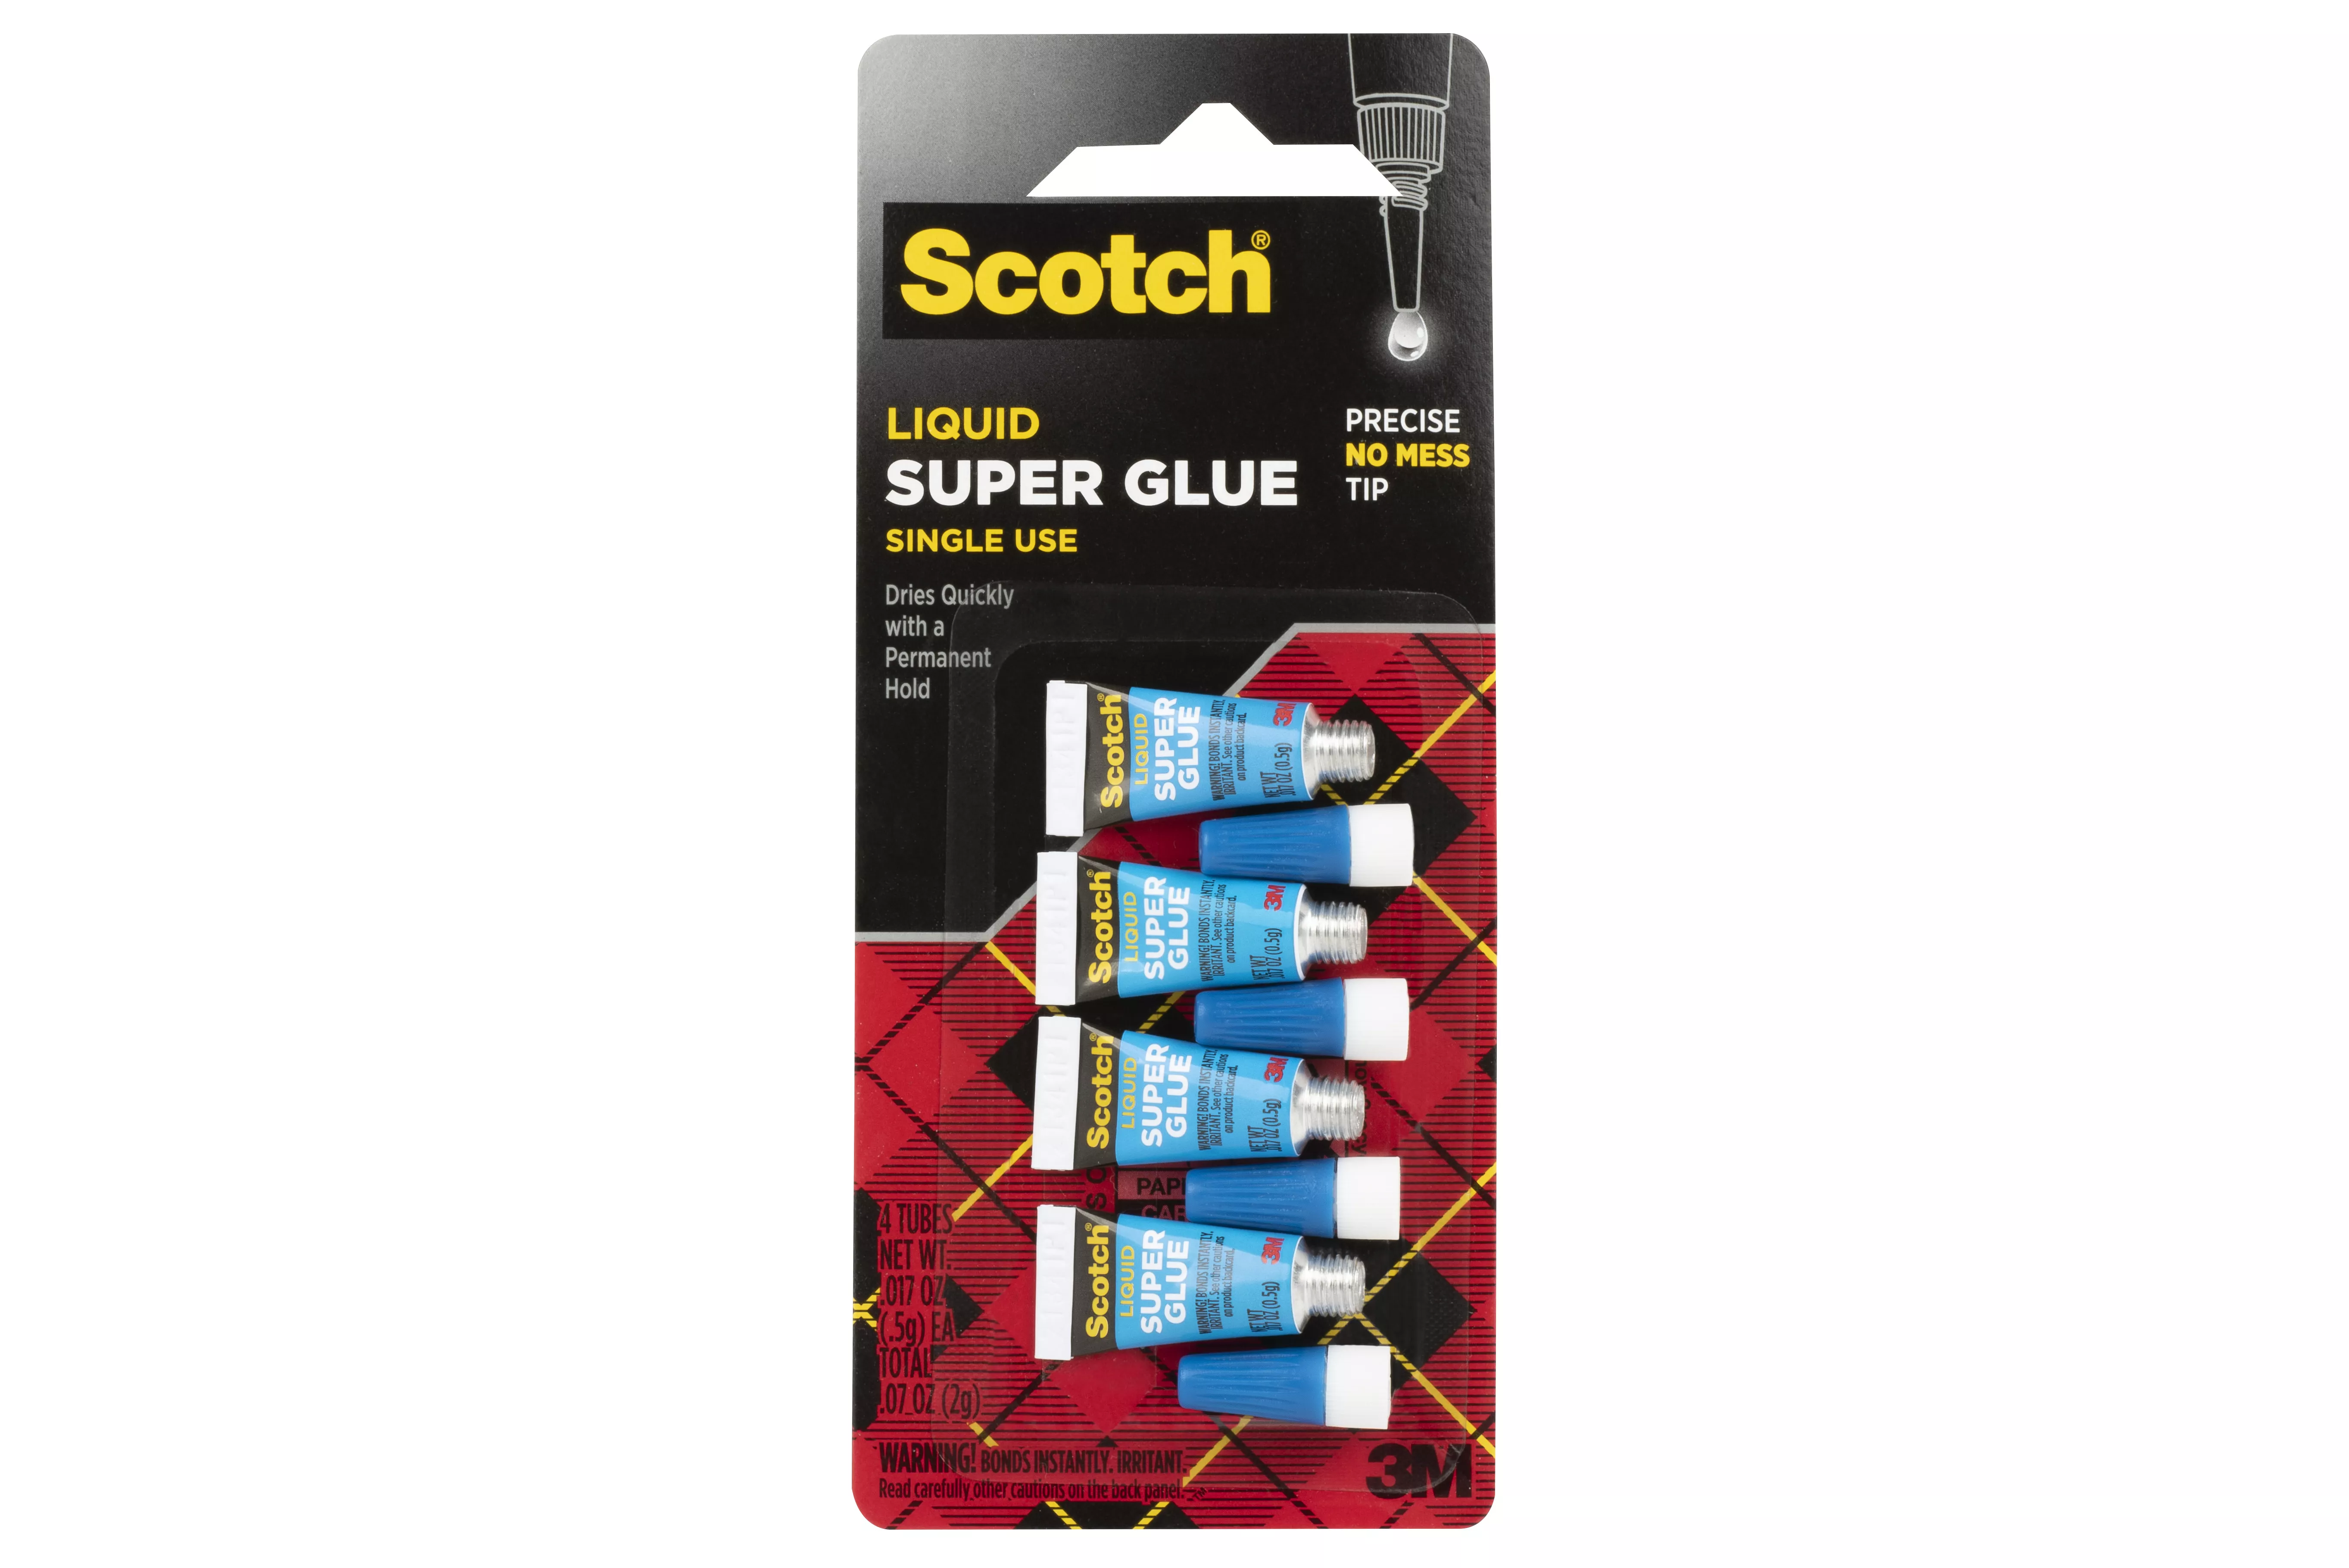 Scotch® Super Glue Liquid AD114, 4-Pack of single-use tubes, .017 oz
each